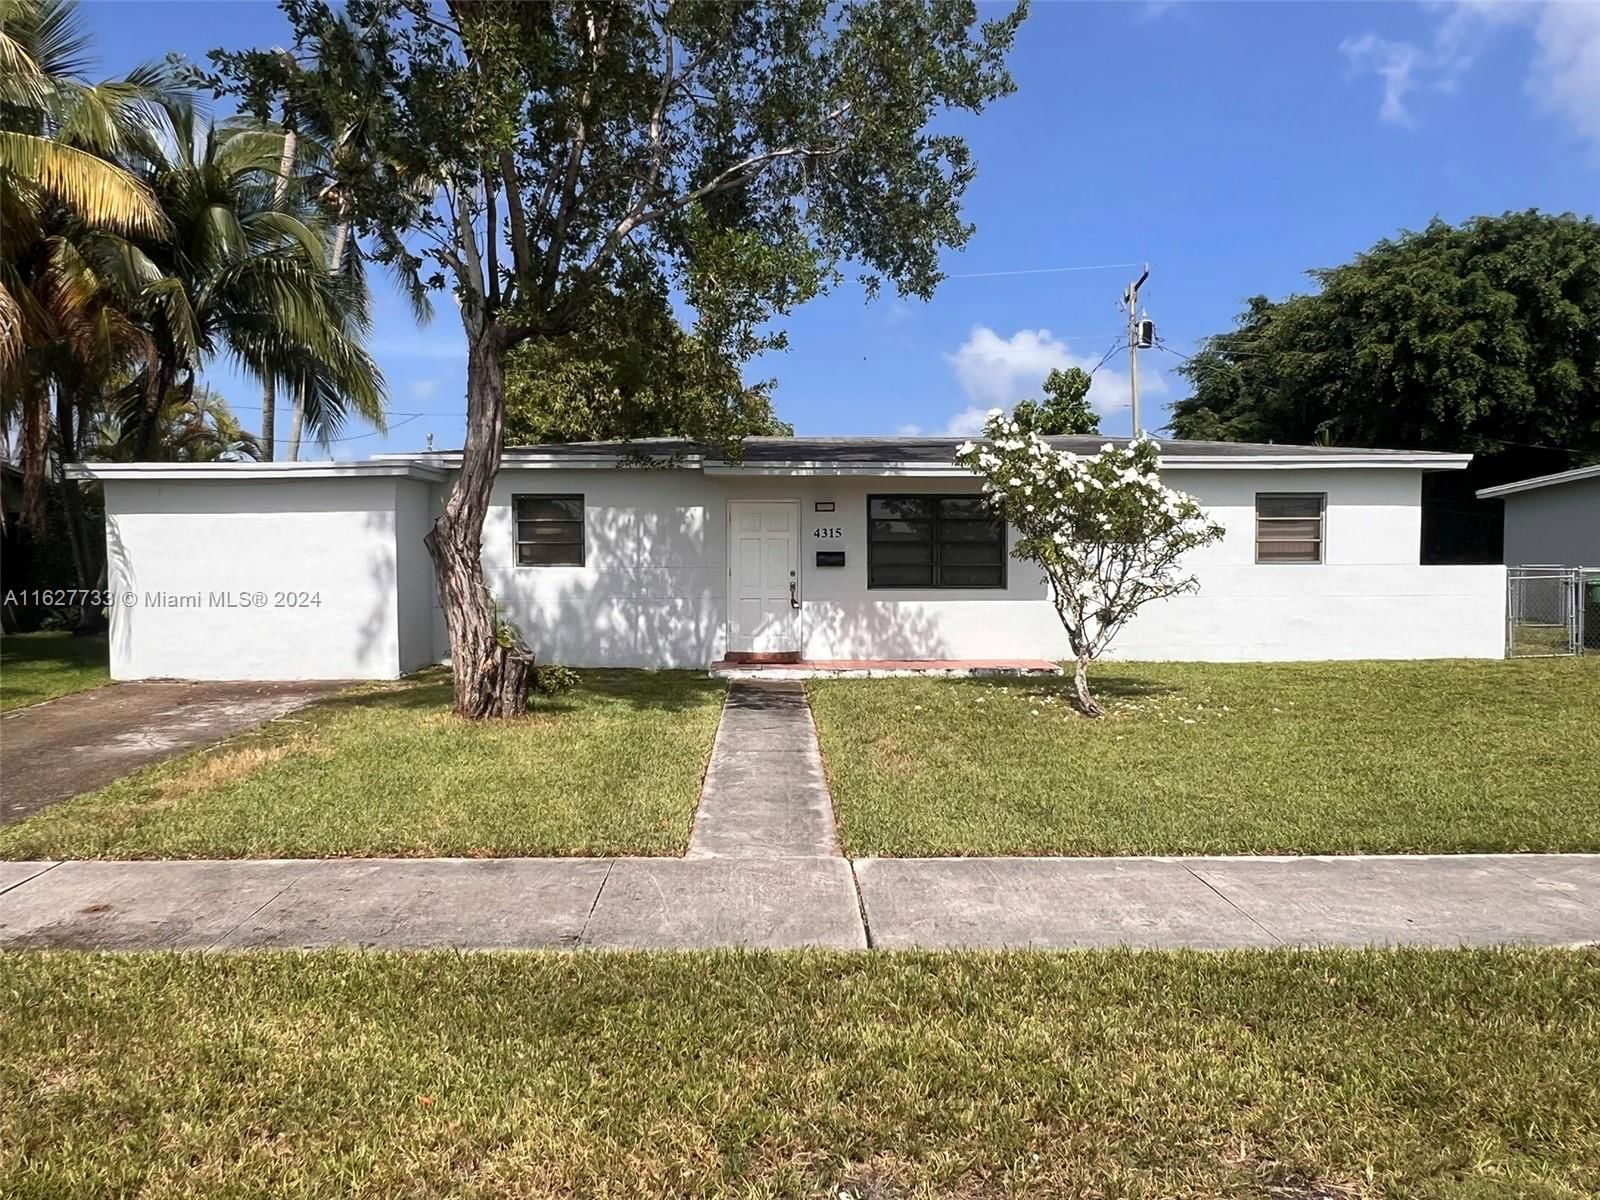 Real estate property located at 4315 98th Ave, Miami-Dade County, FAIRLAWN ESTS 1ST ADDN, Miami, FL